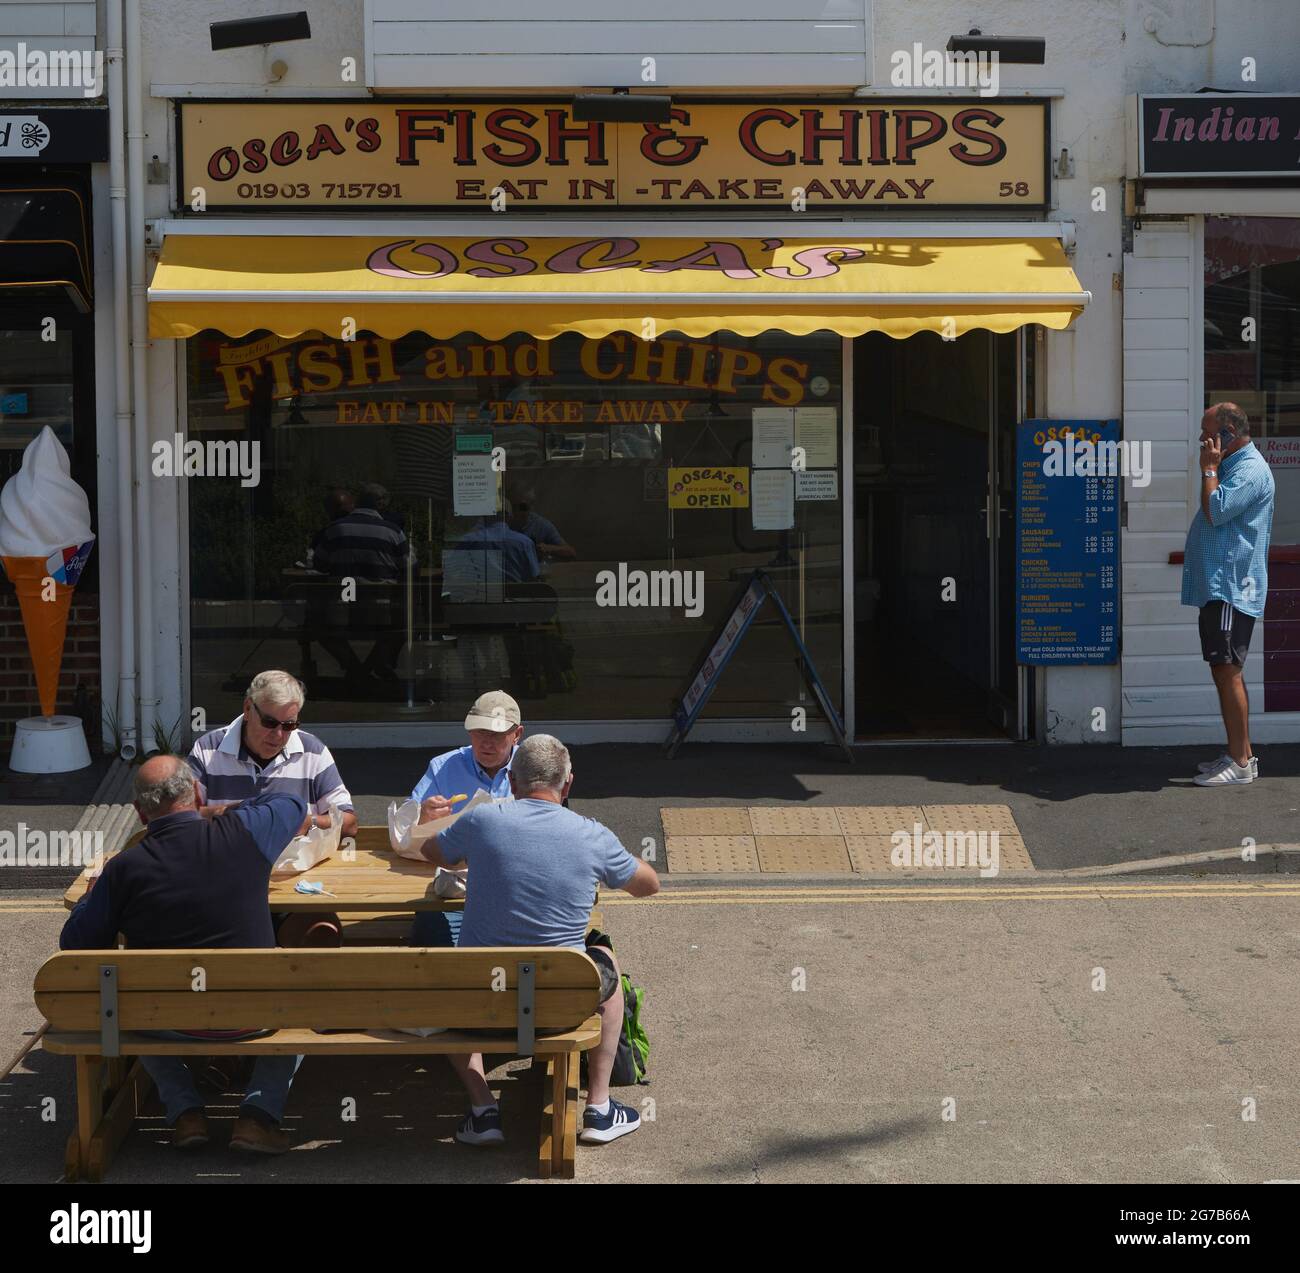 People enjoying eating fish andd ships in the street of Littlehampton, UK. Stock Photo